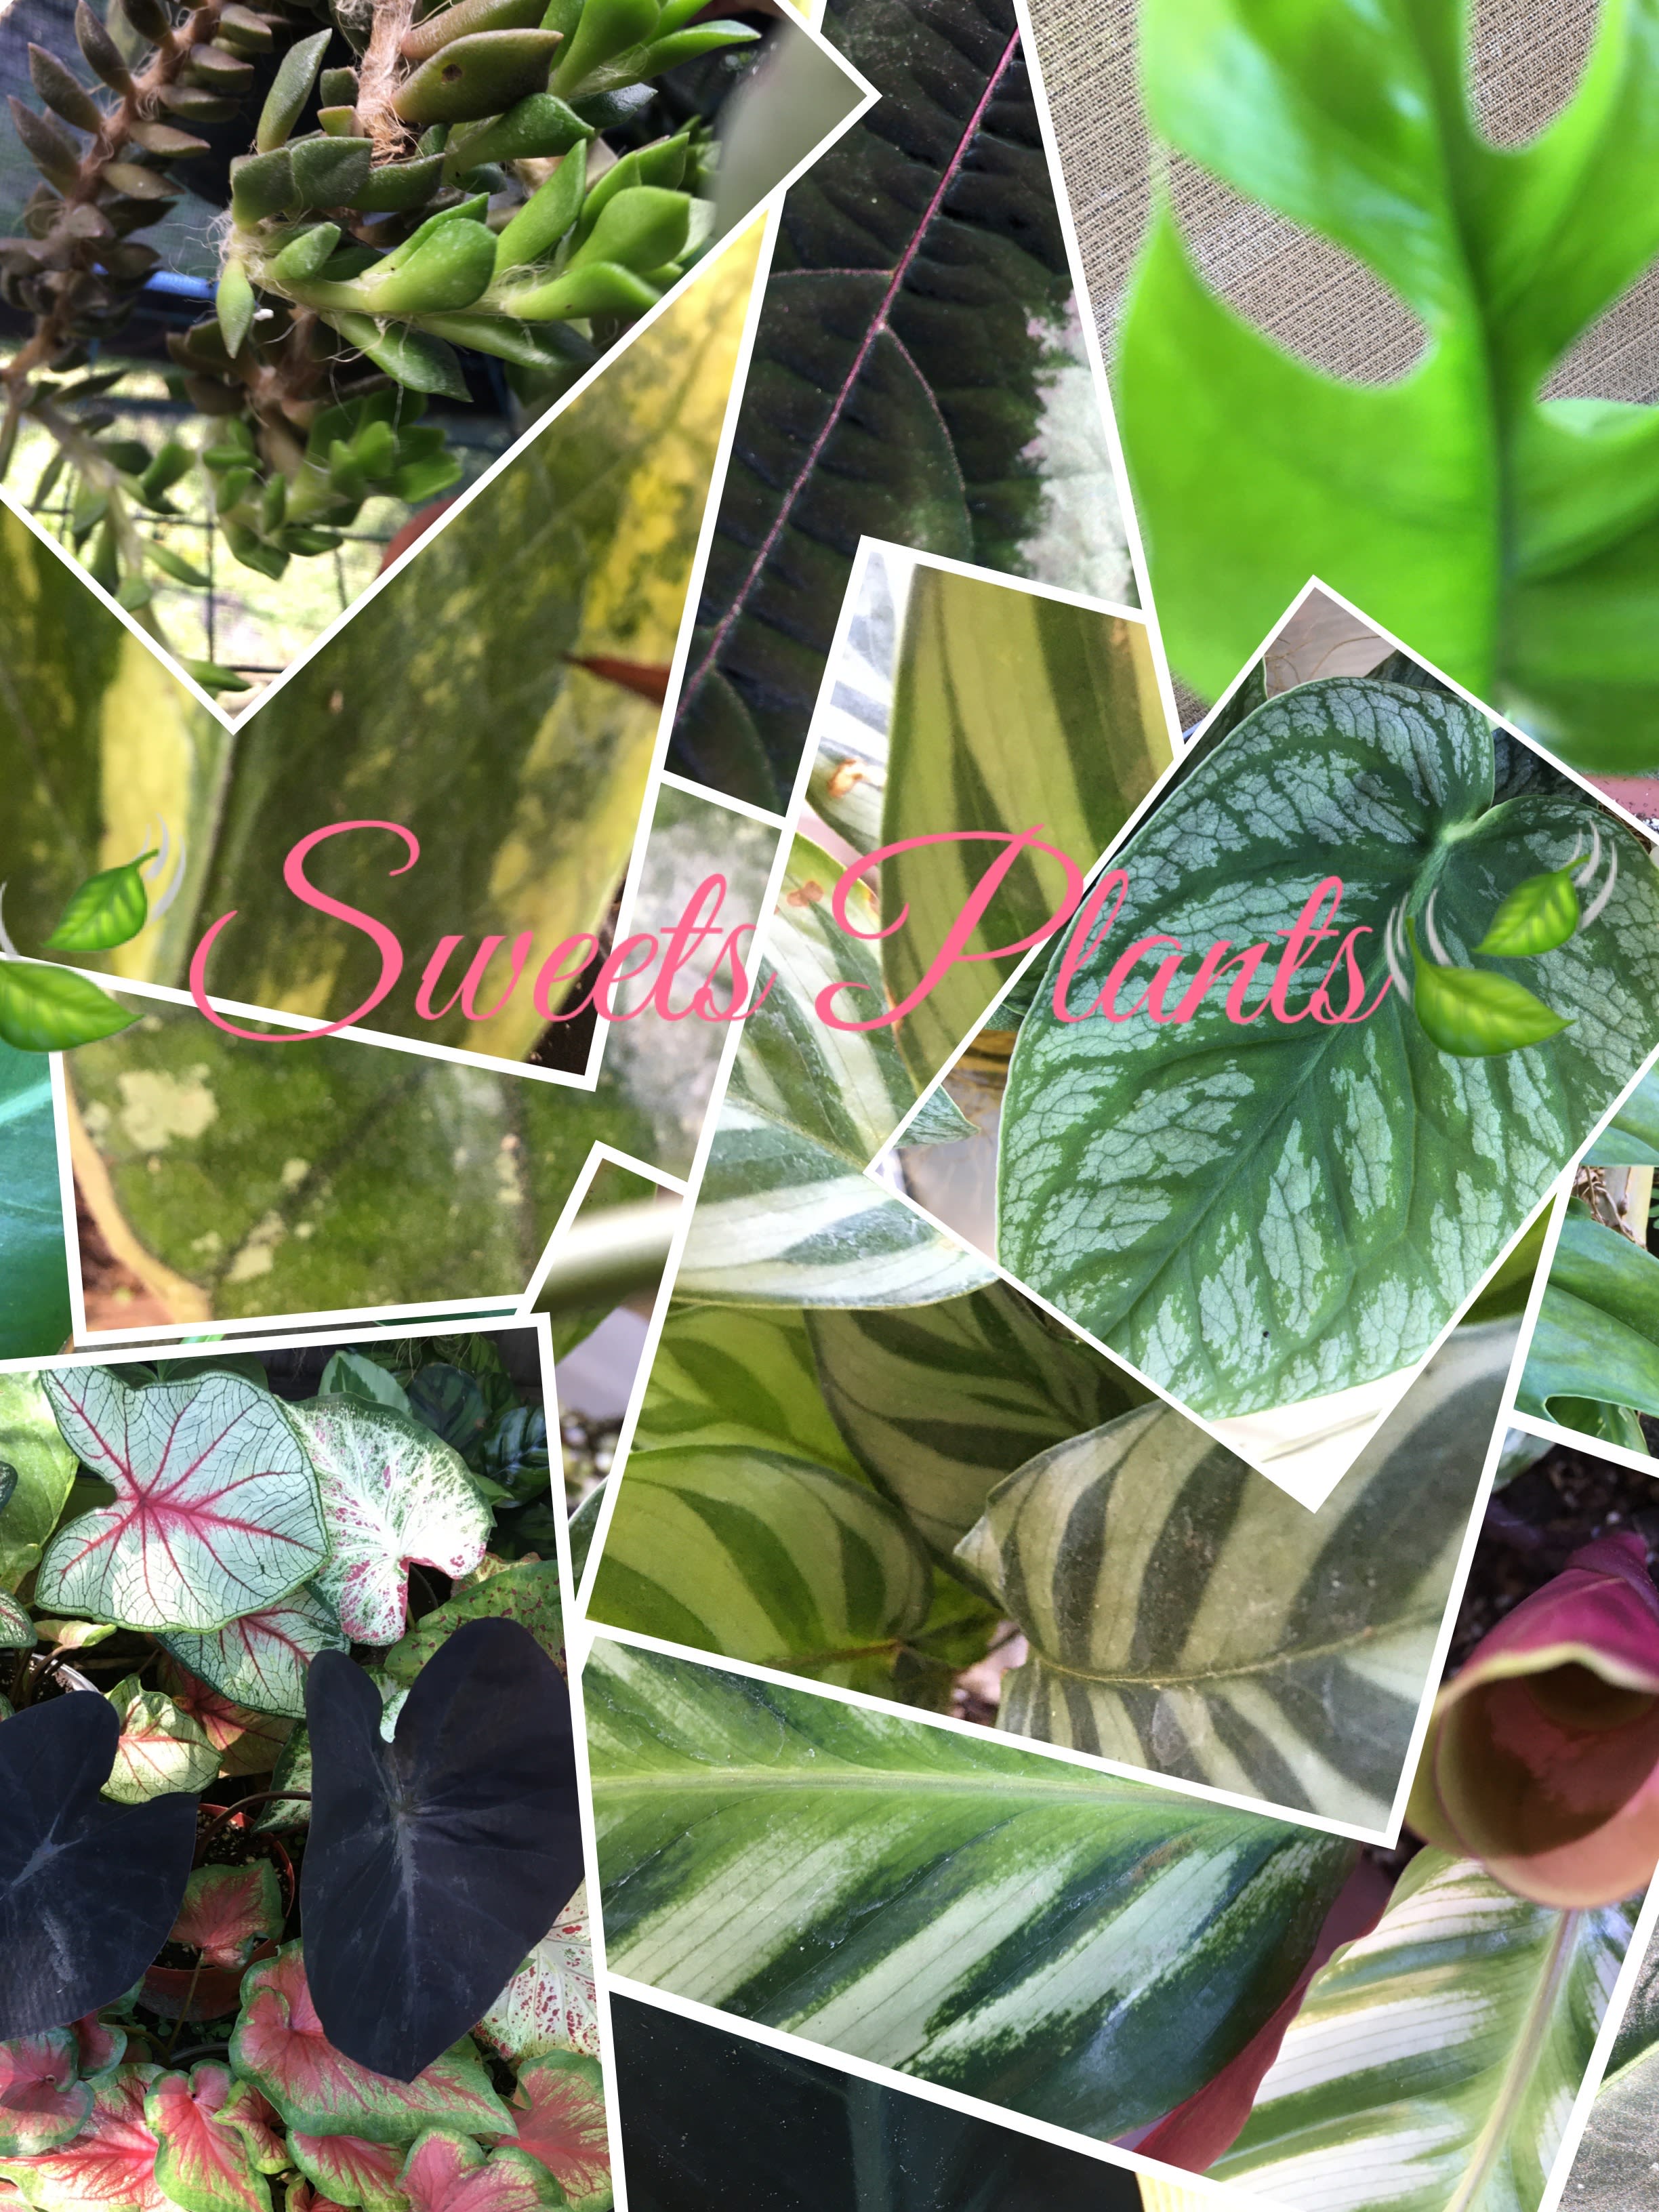 Sweets Plants